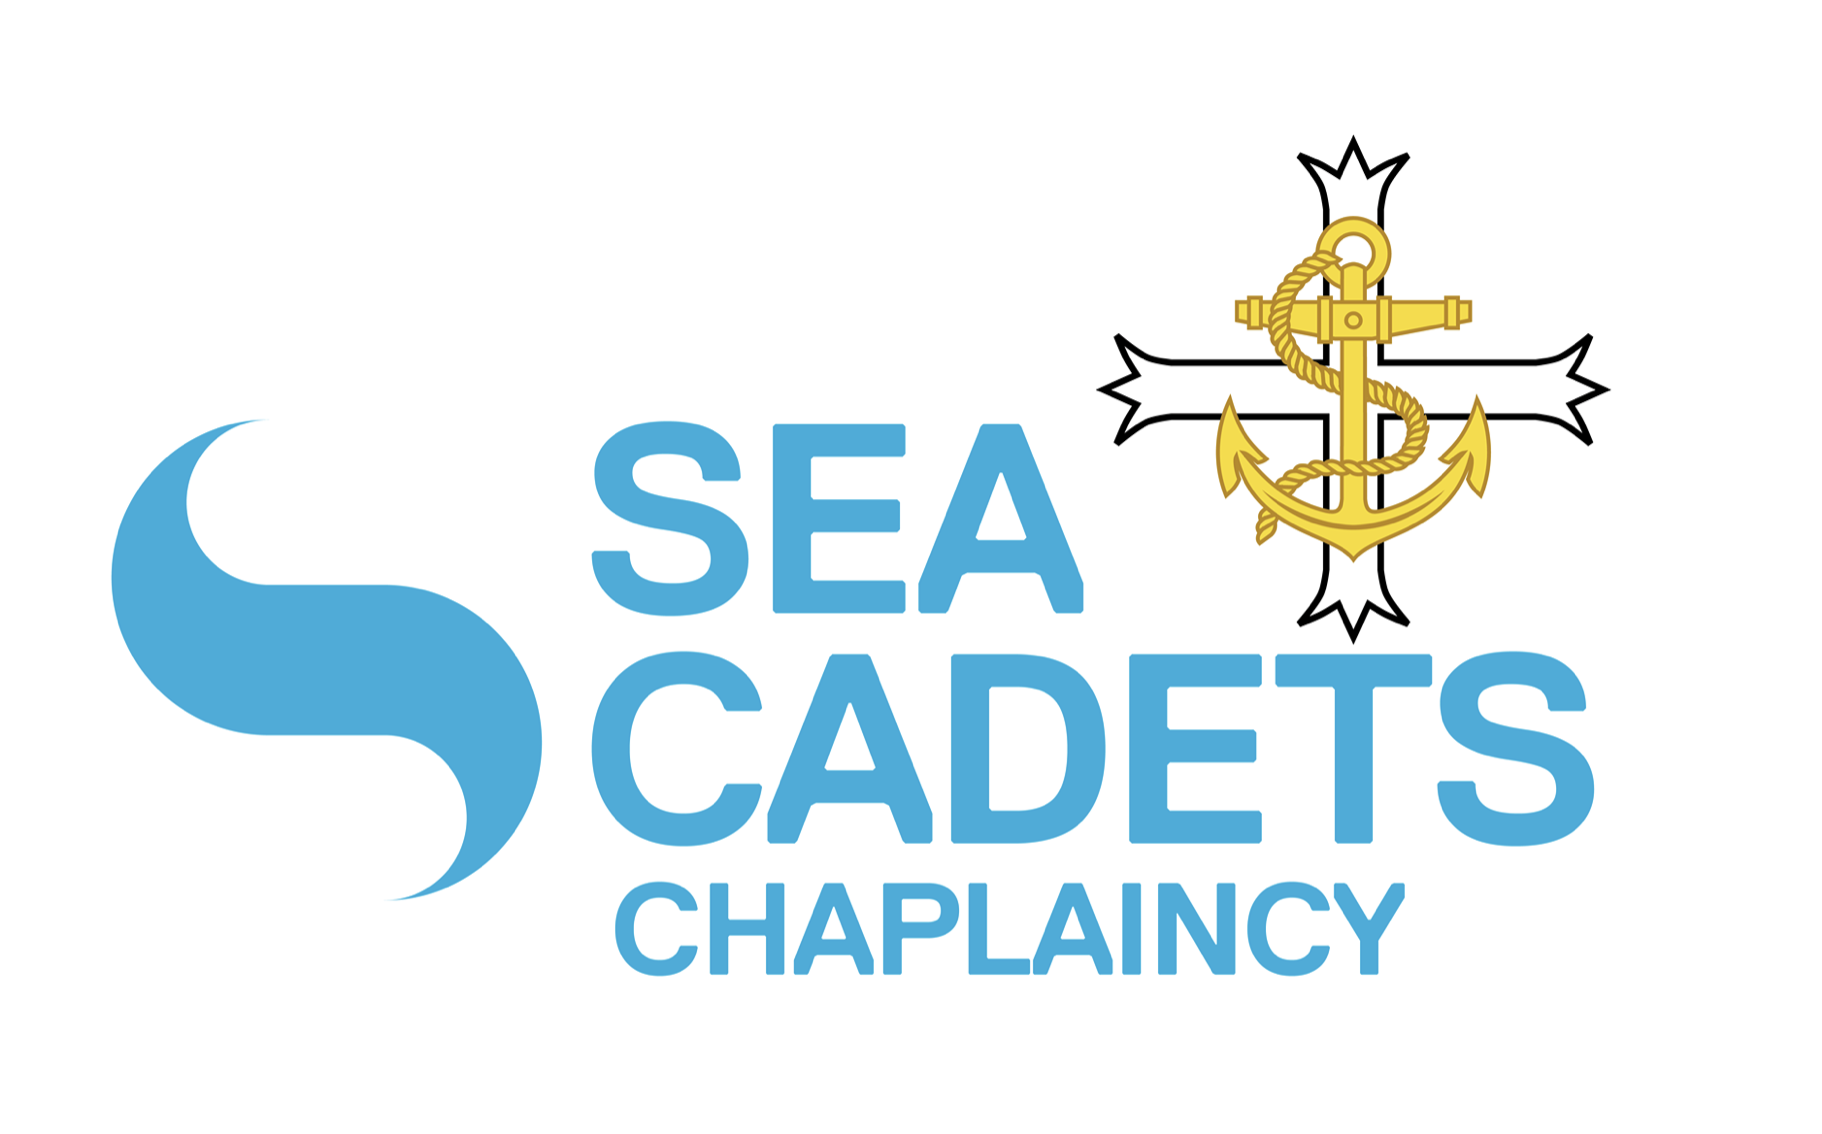 Sea Cadet Chaplaincy